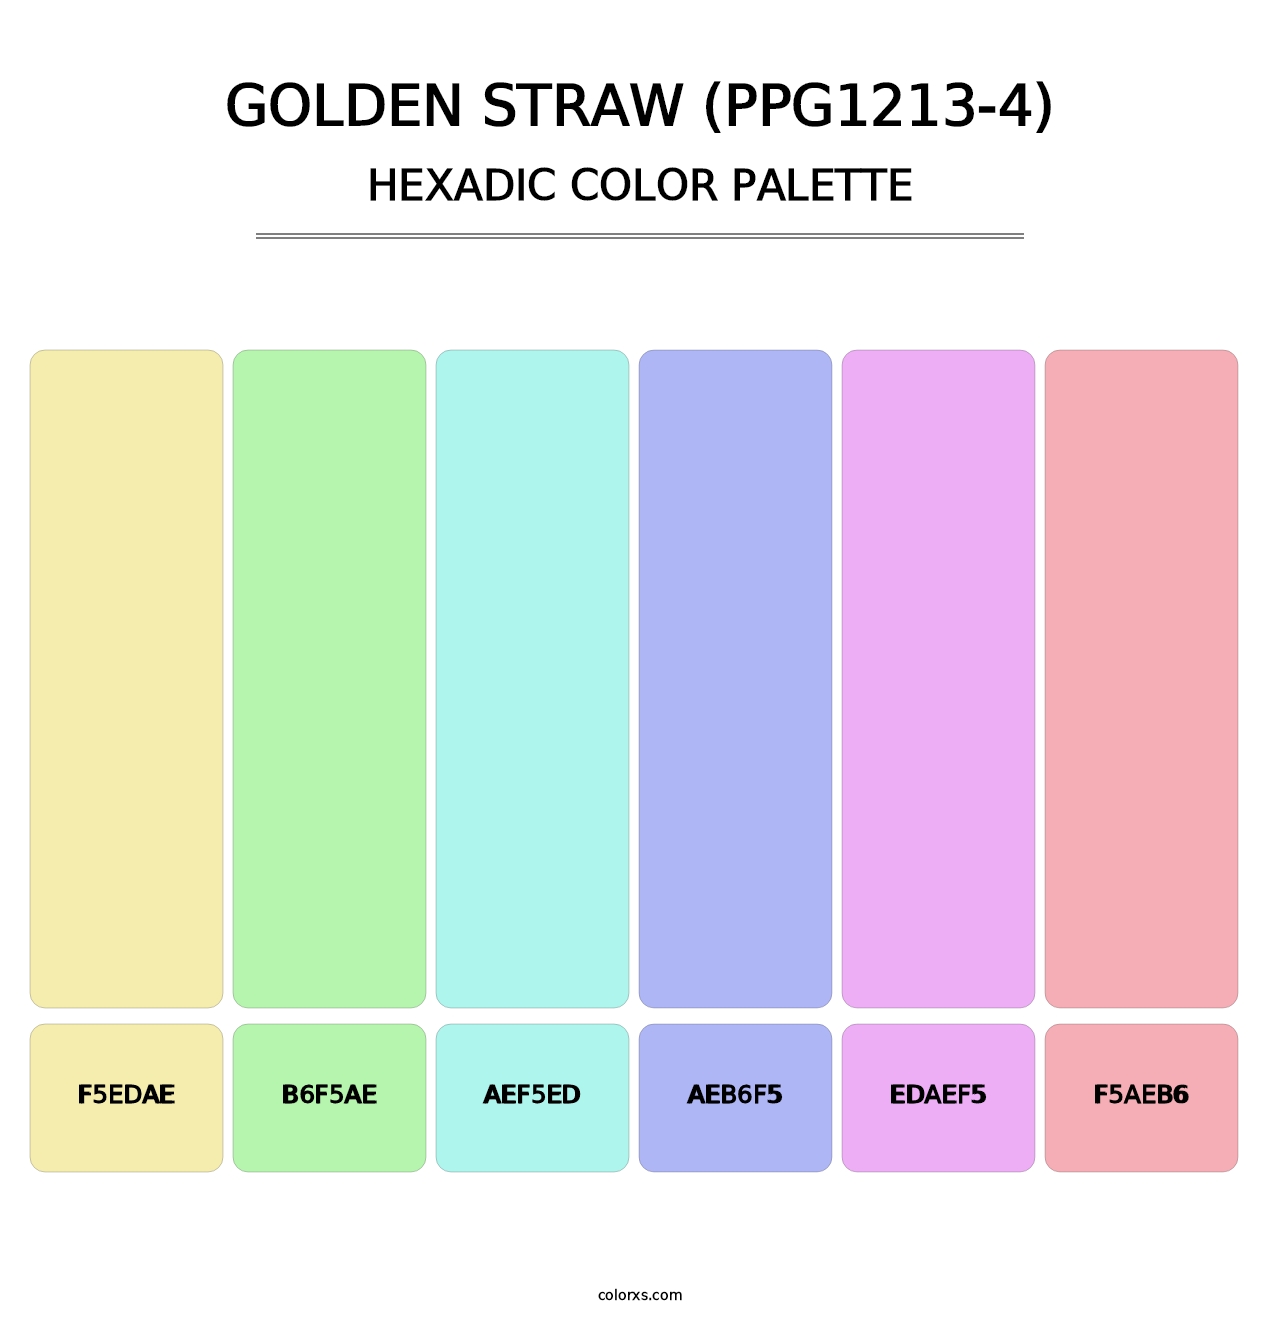 Golden Straw (PPG1213-4) - Hexadic Color Palette